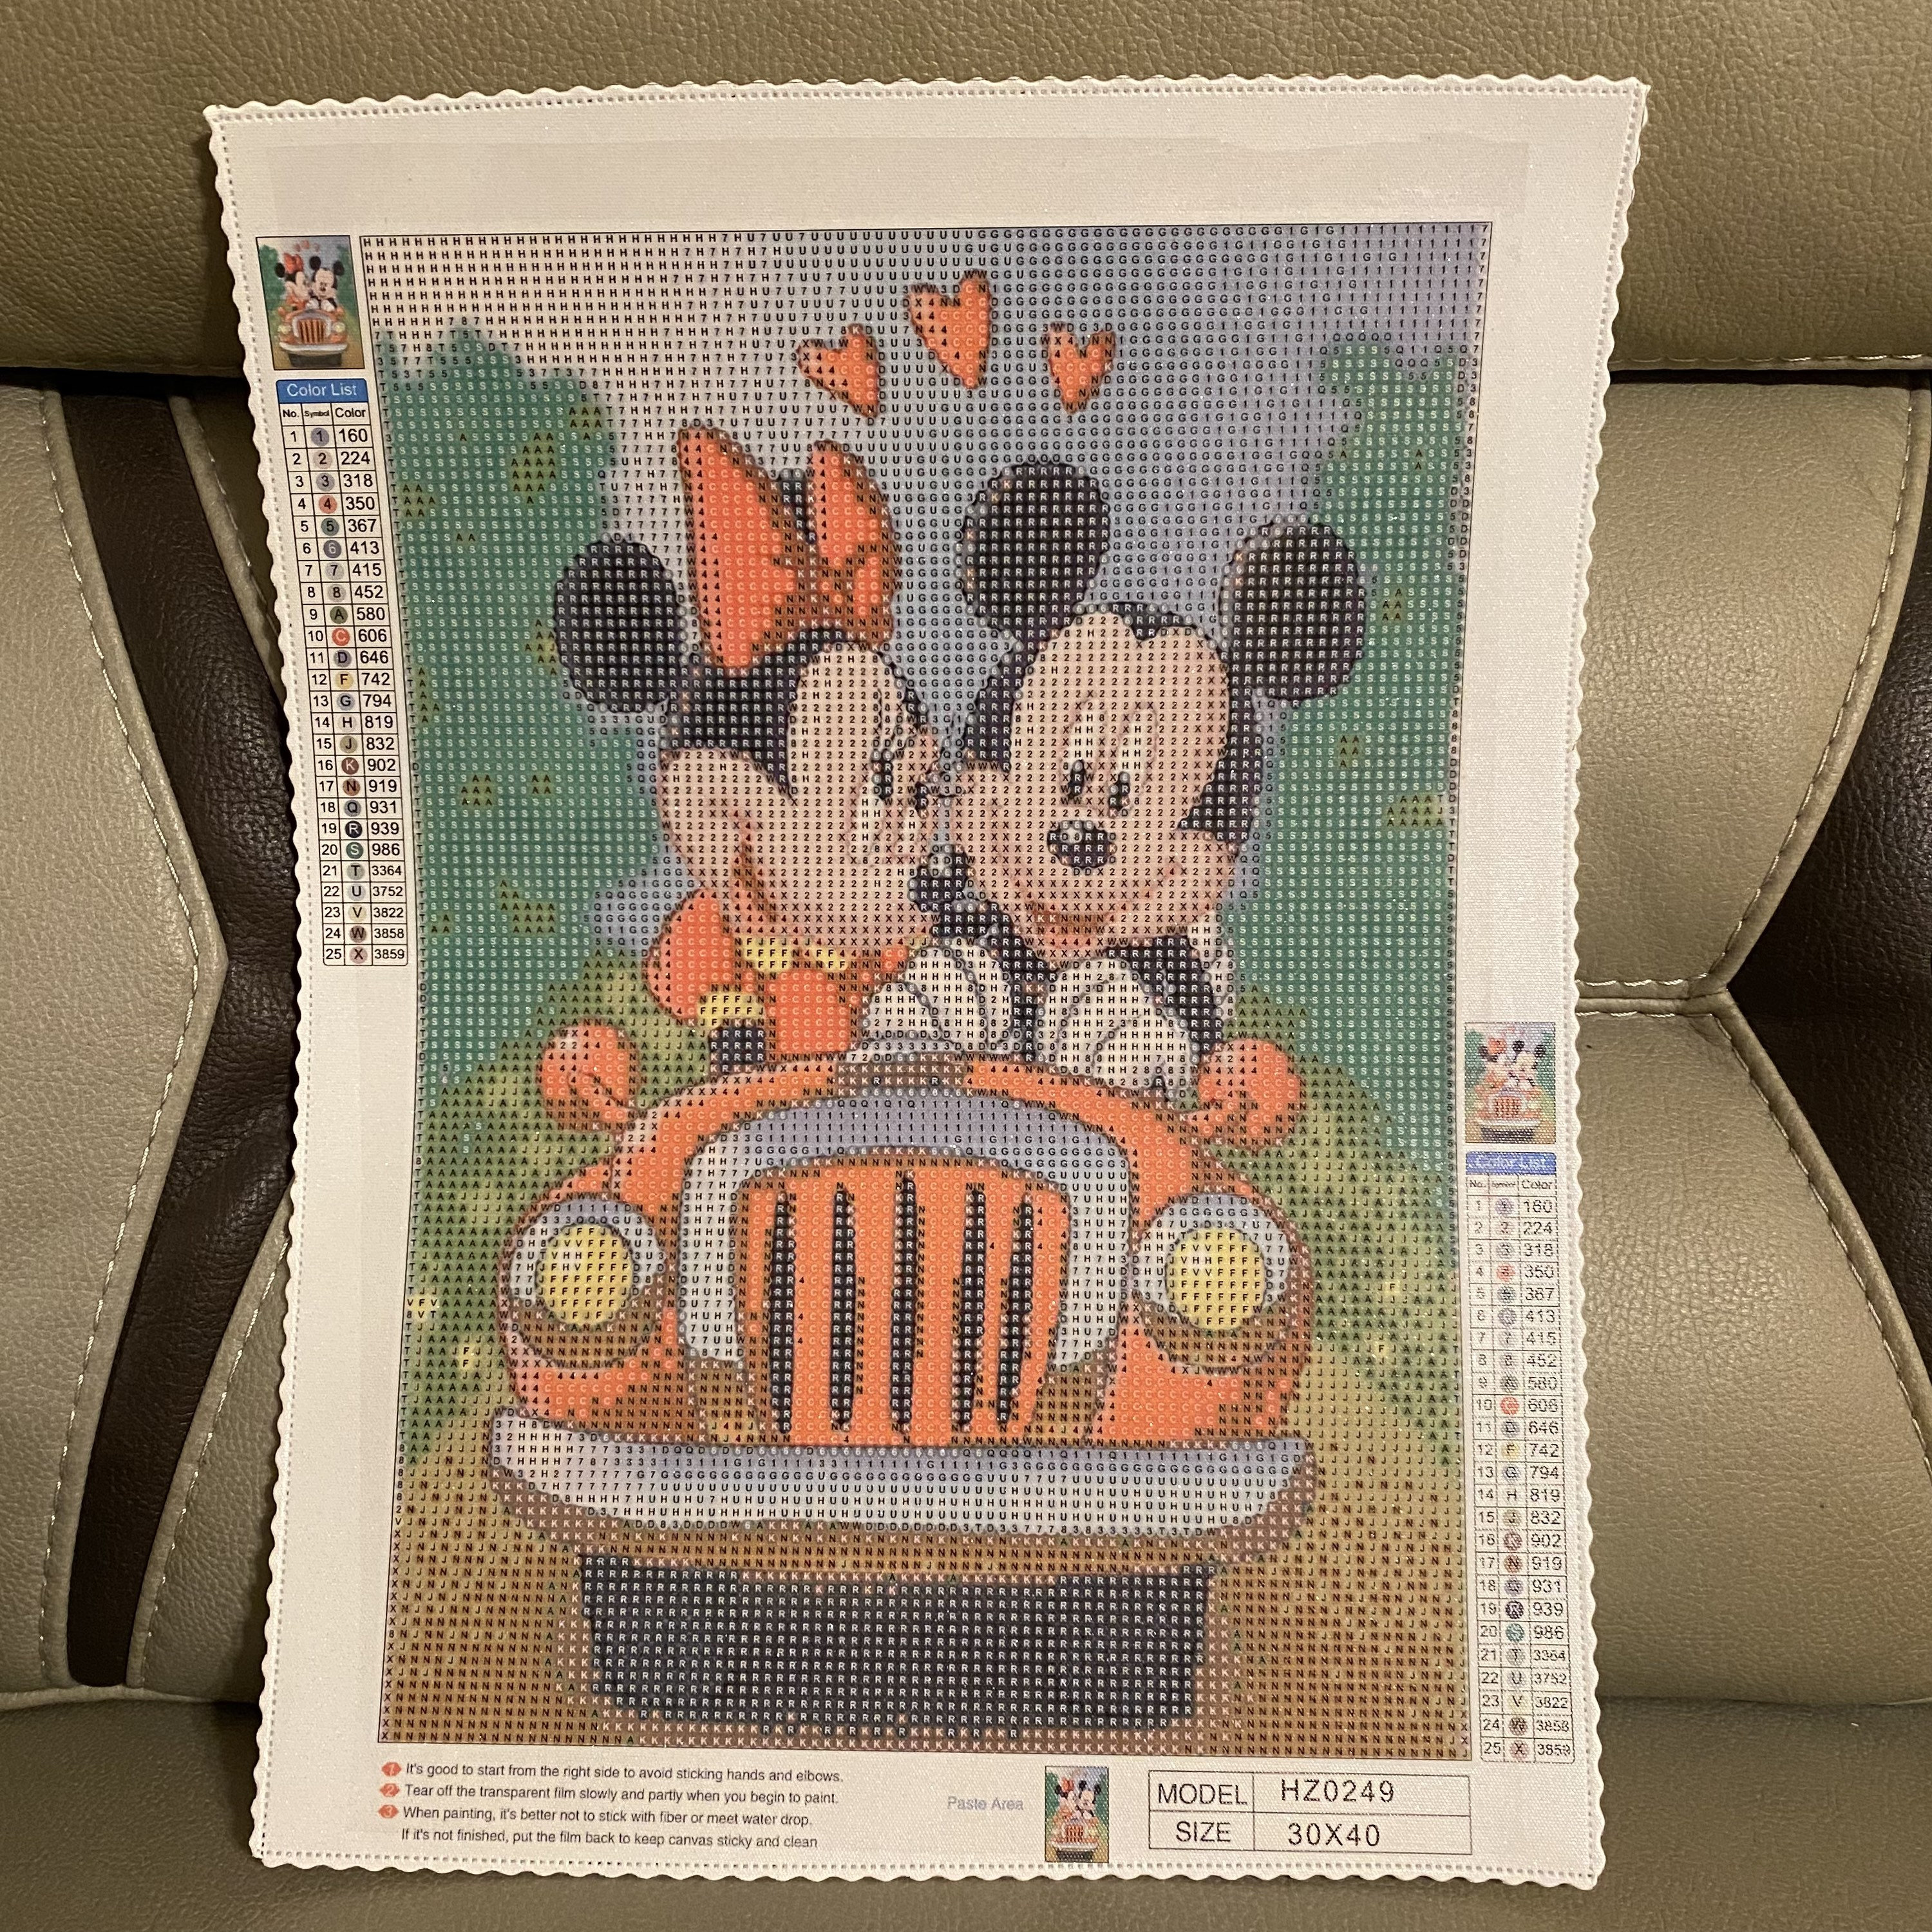 Disney Diamond Painting Mickey Mouse Diamond Art Cartoon Character Cross  Stitch Embroidery Donald Duck Mosaic PLUTO Home Decor